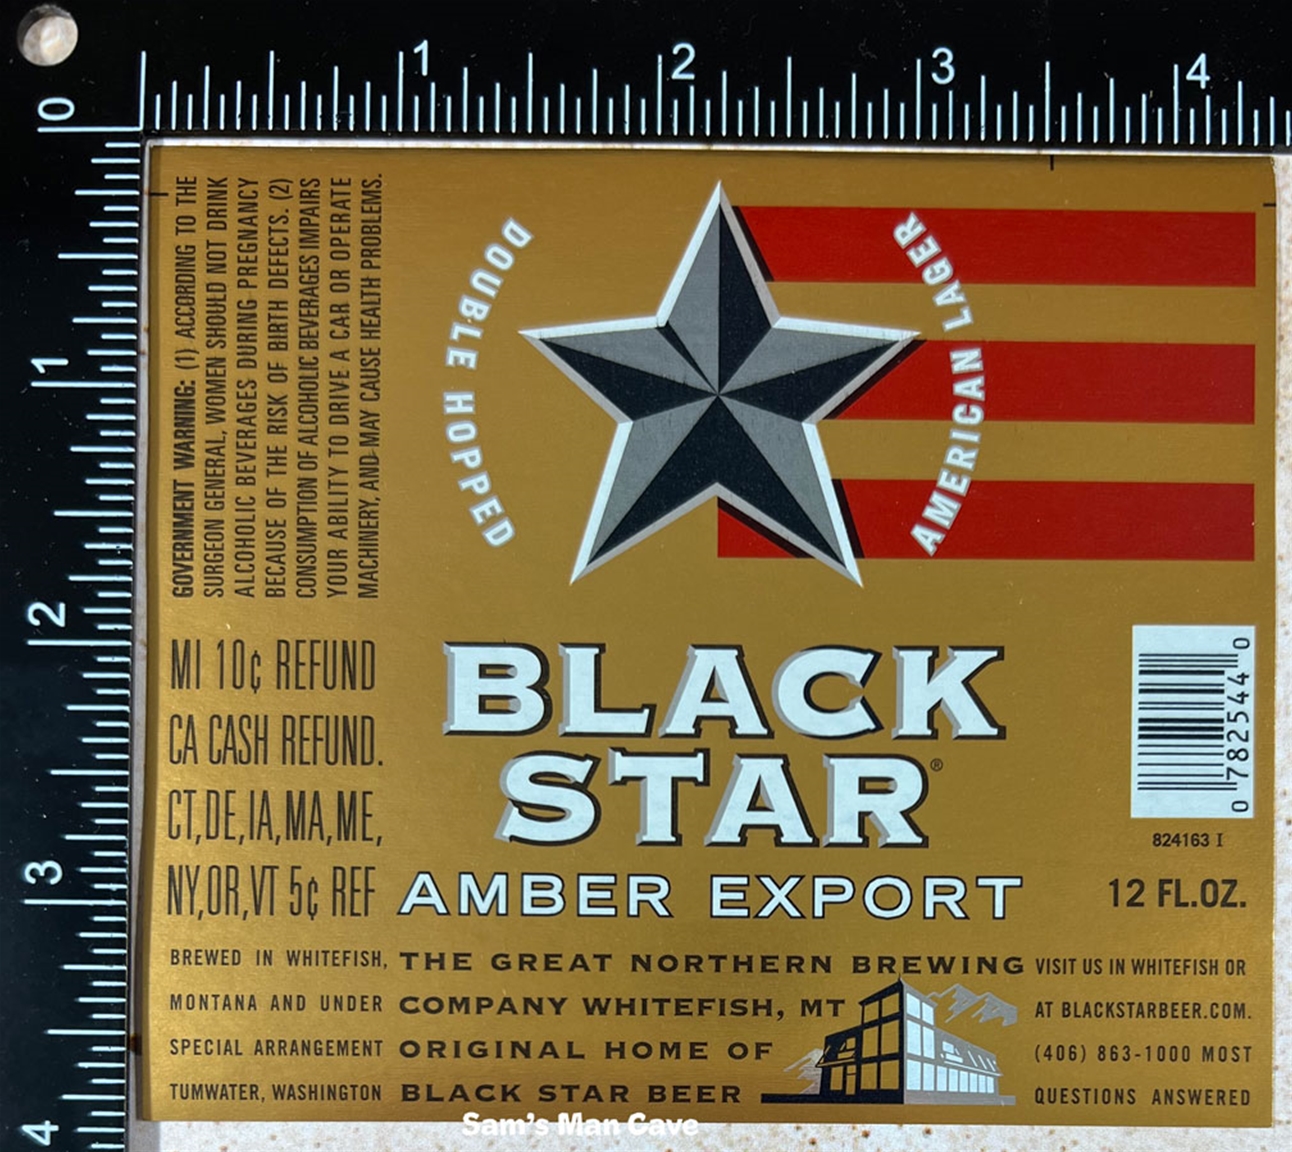 Black Star Amber Export Beer Label